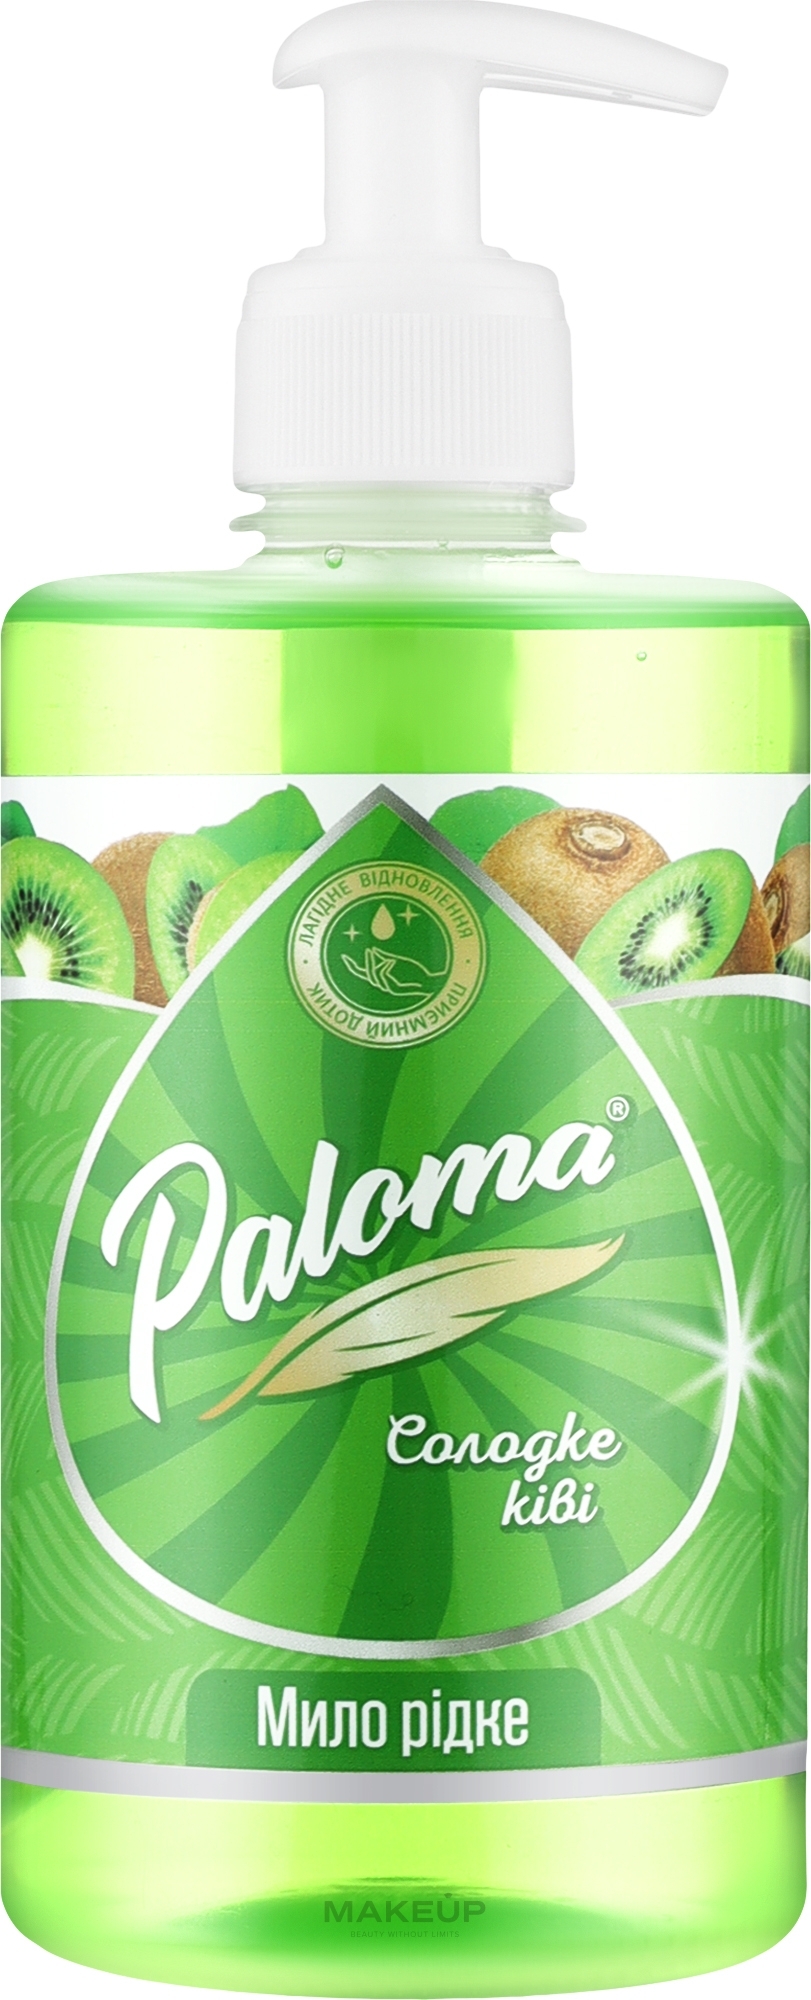 Крем-мыло "Сладкий киви" - Paloma — фото 500ml